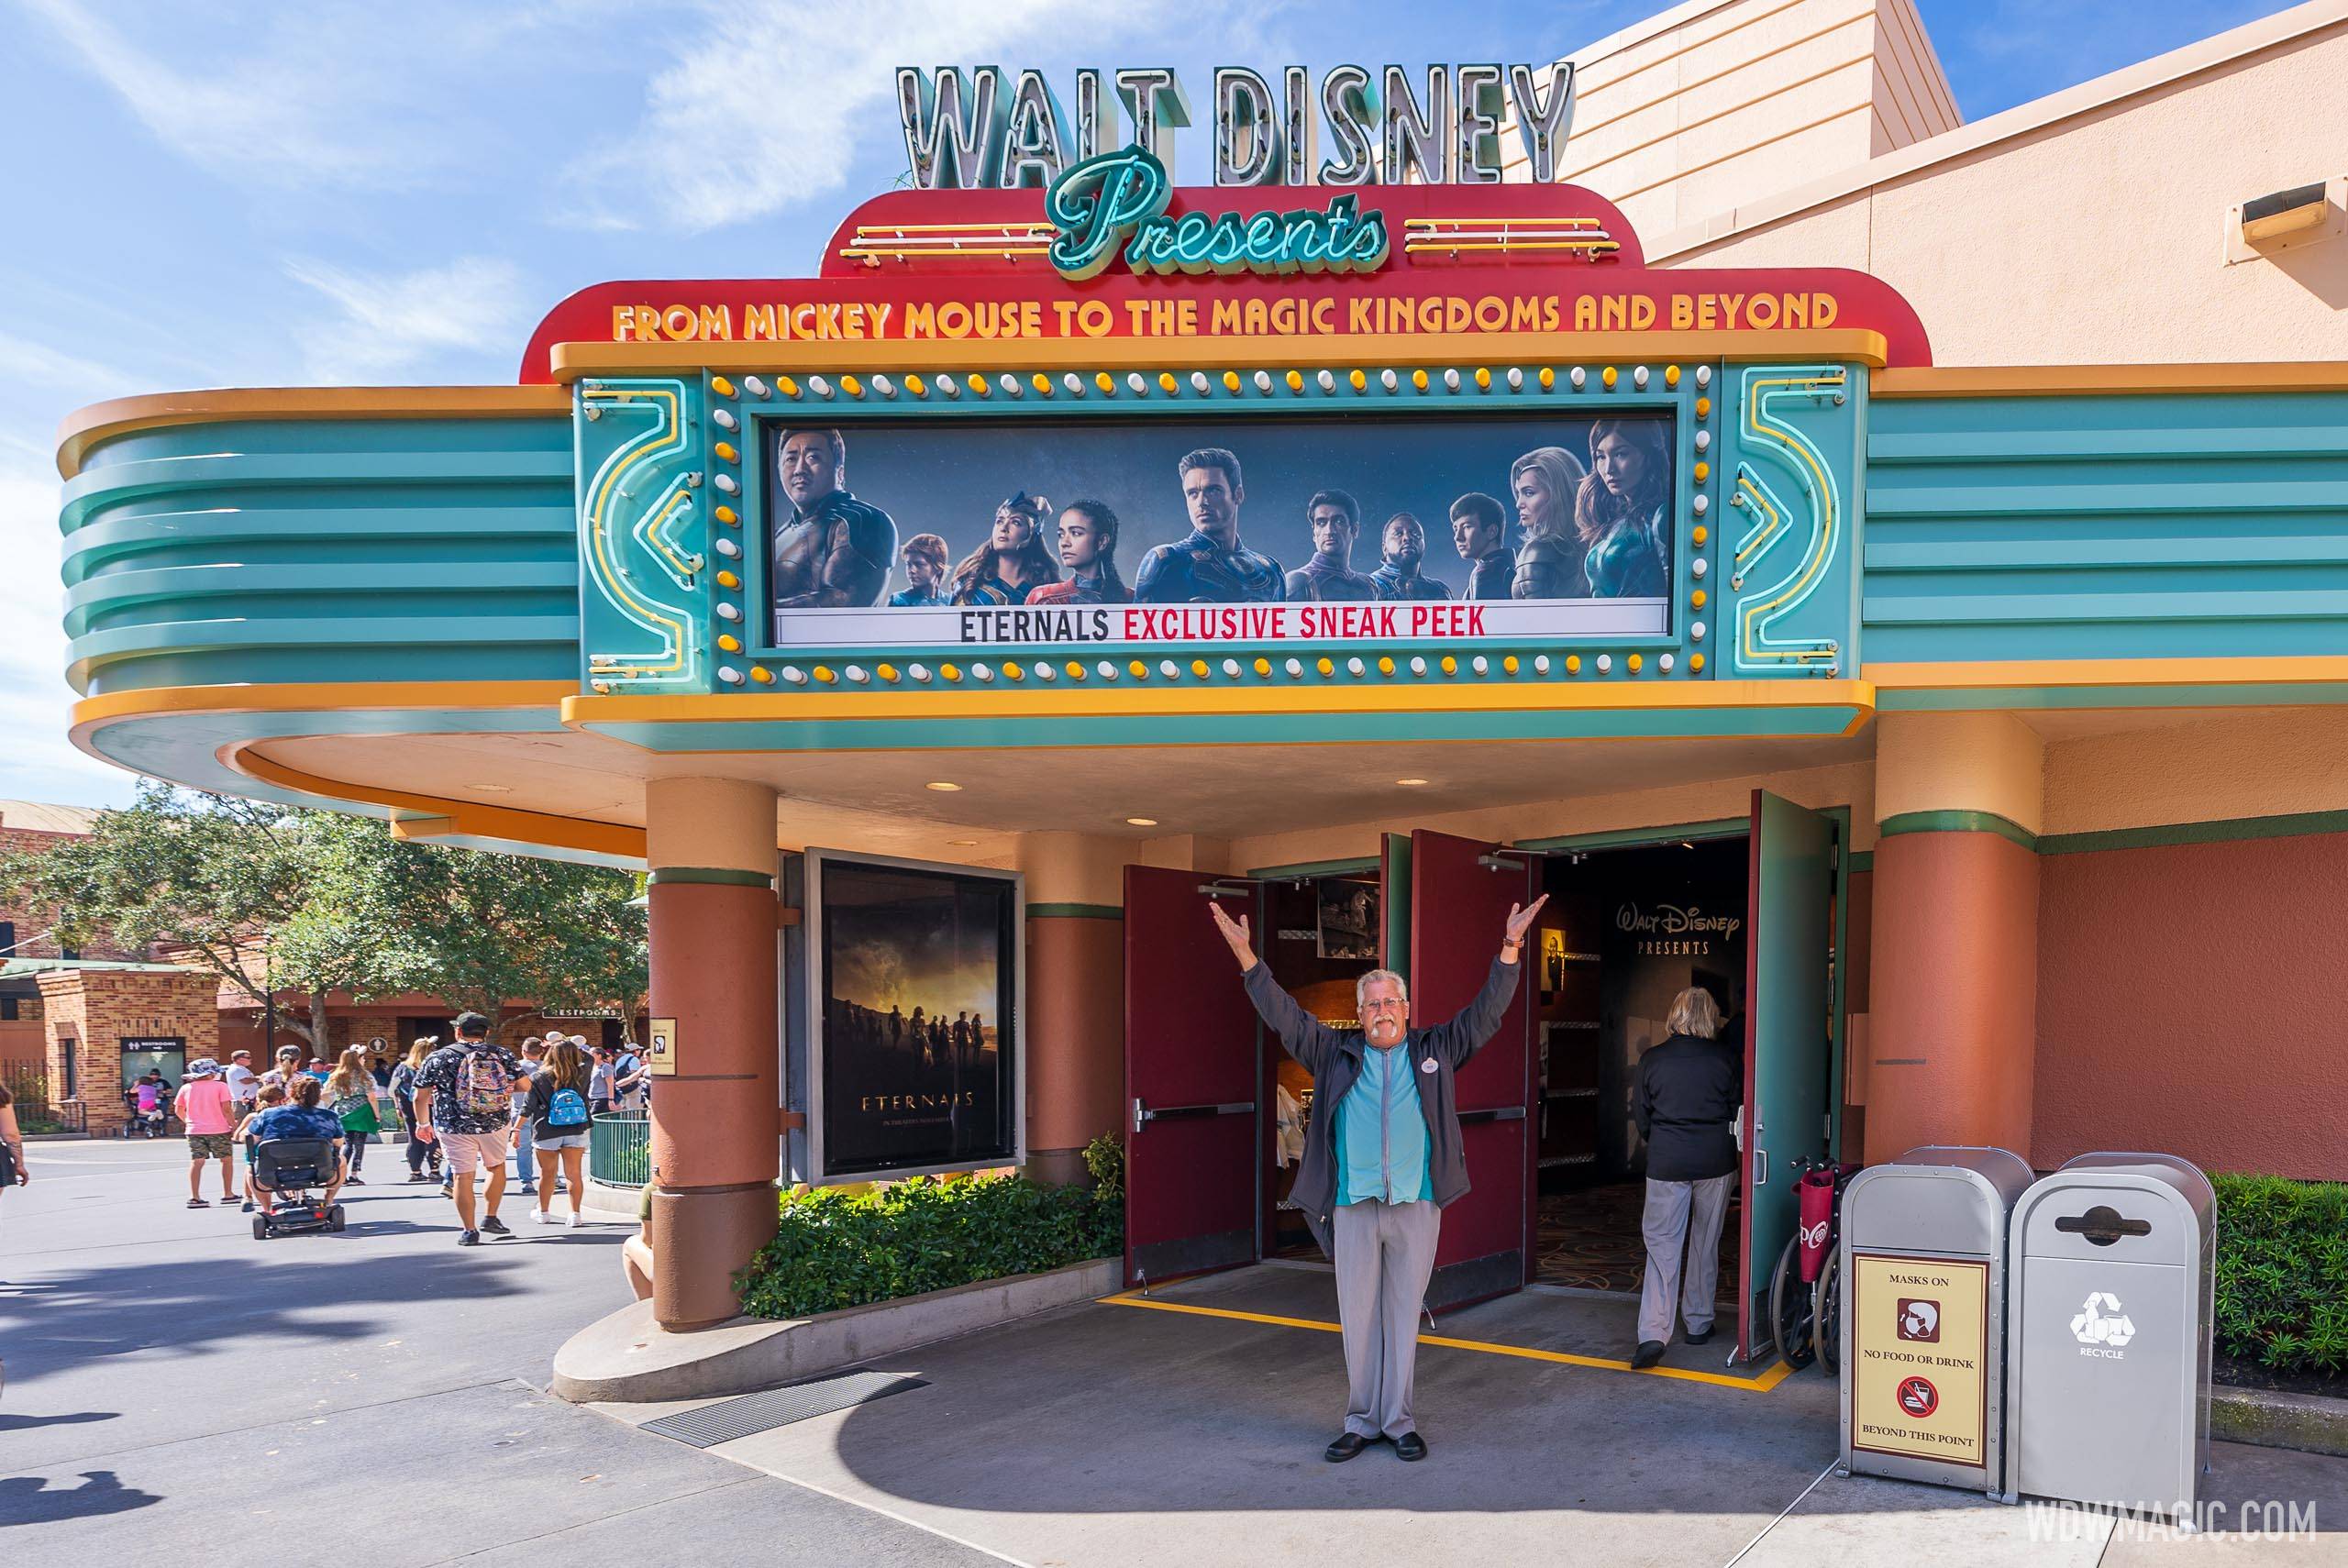 Sneak Peek of Disney Pixar's 'Coco' coming to 'Walt Disney Presents' at Disney's Hollywood Studios